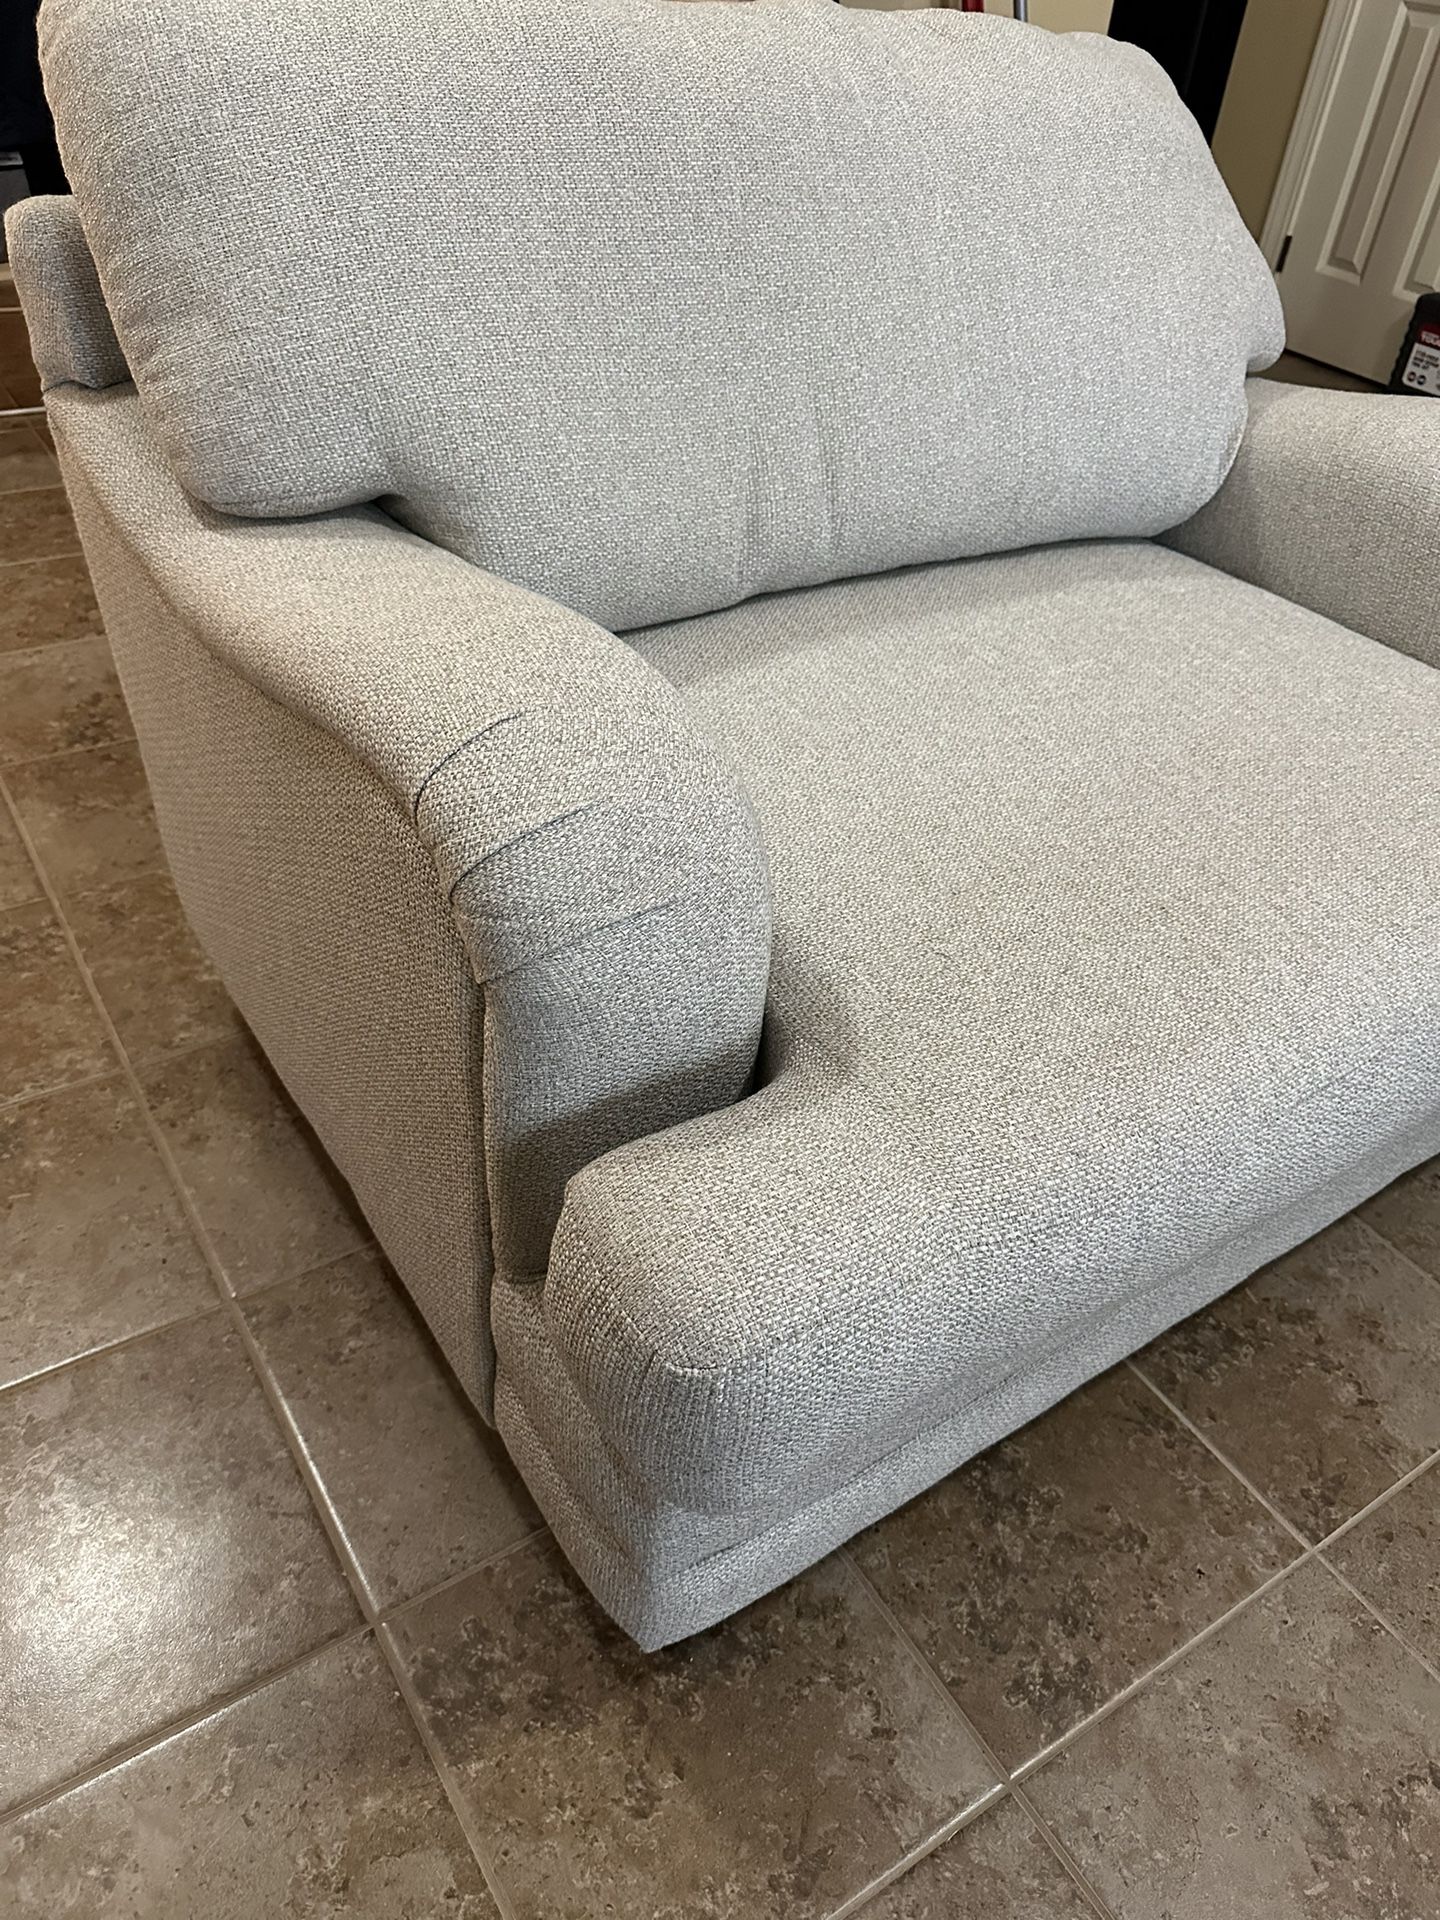 PRICE NEGOTIABLE! Beautiful Beige Linen Oversized Chair 